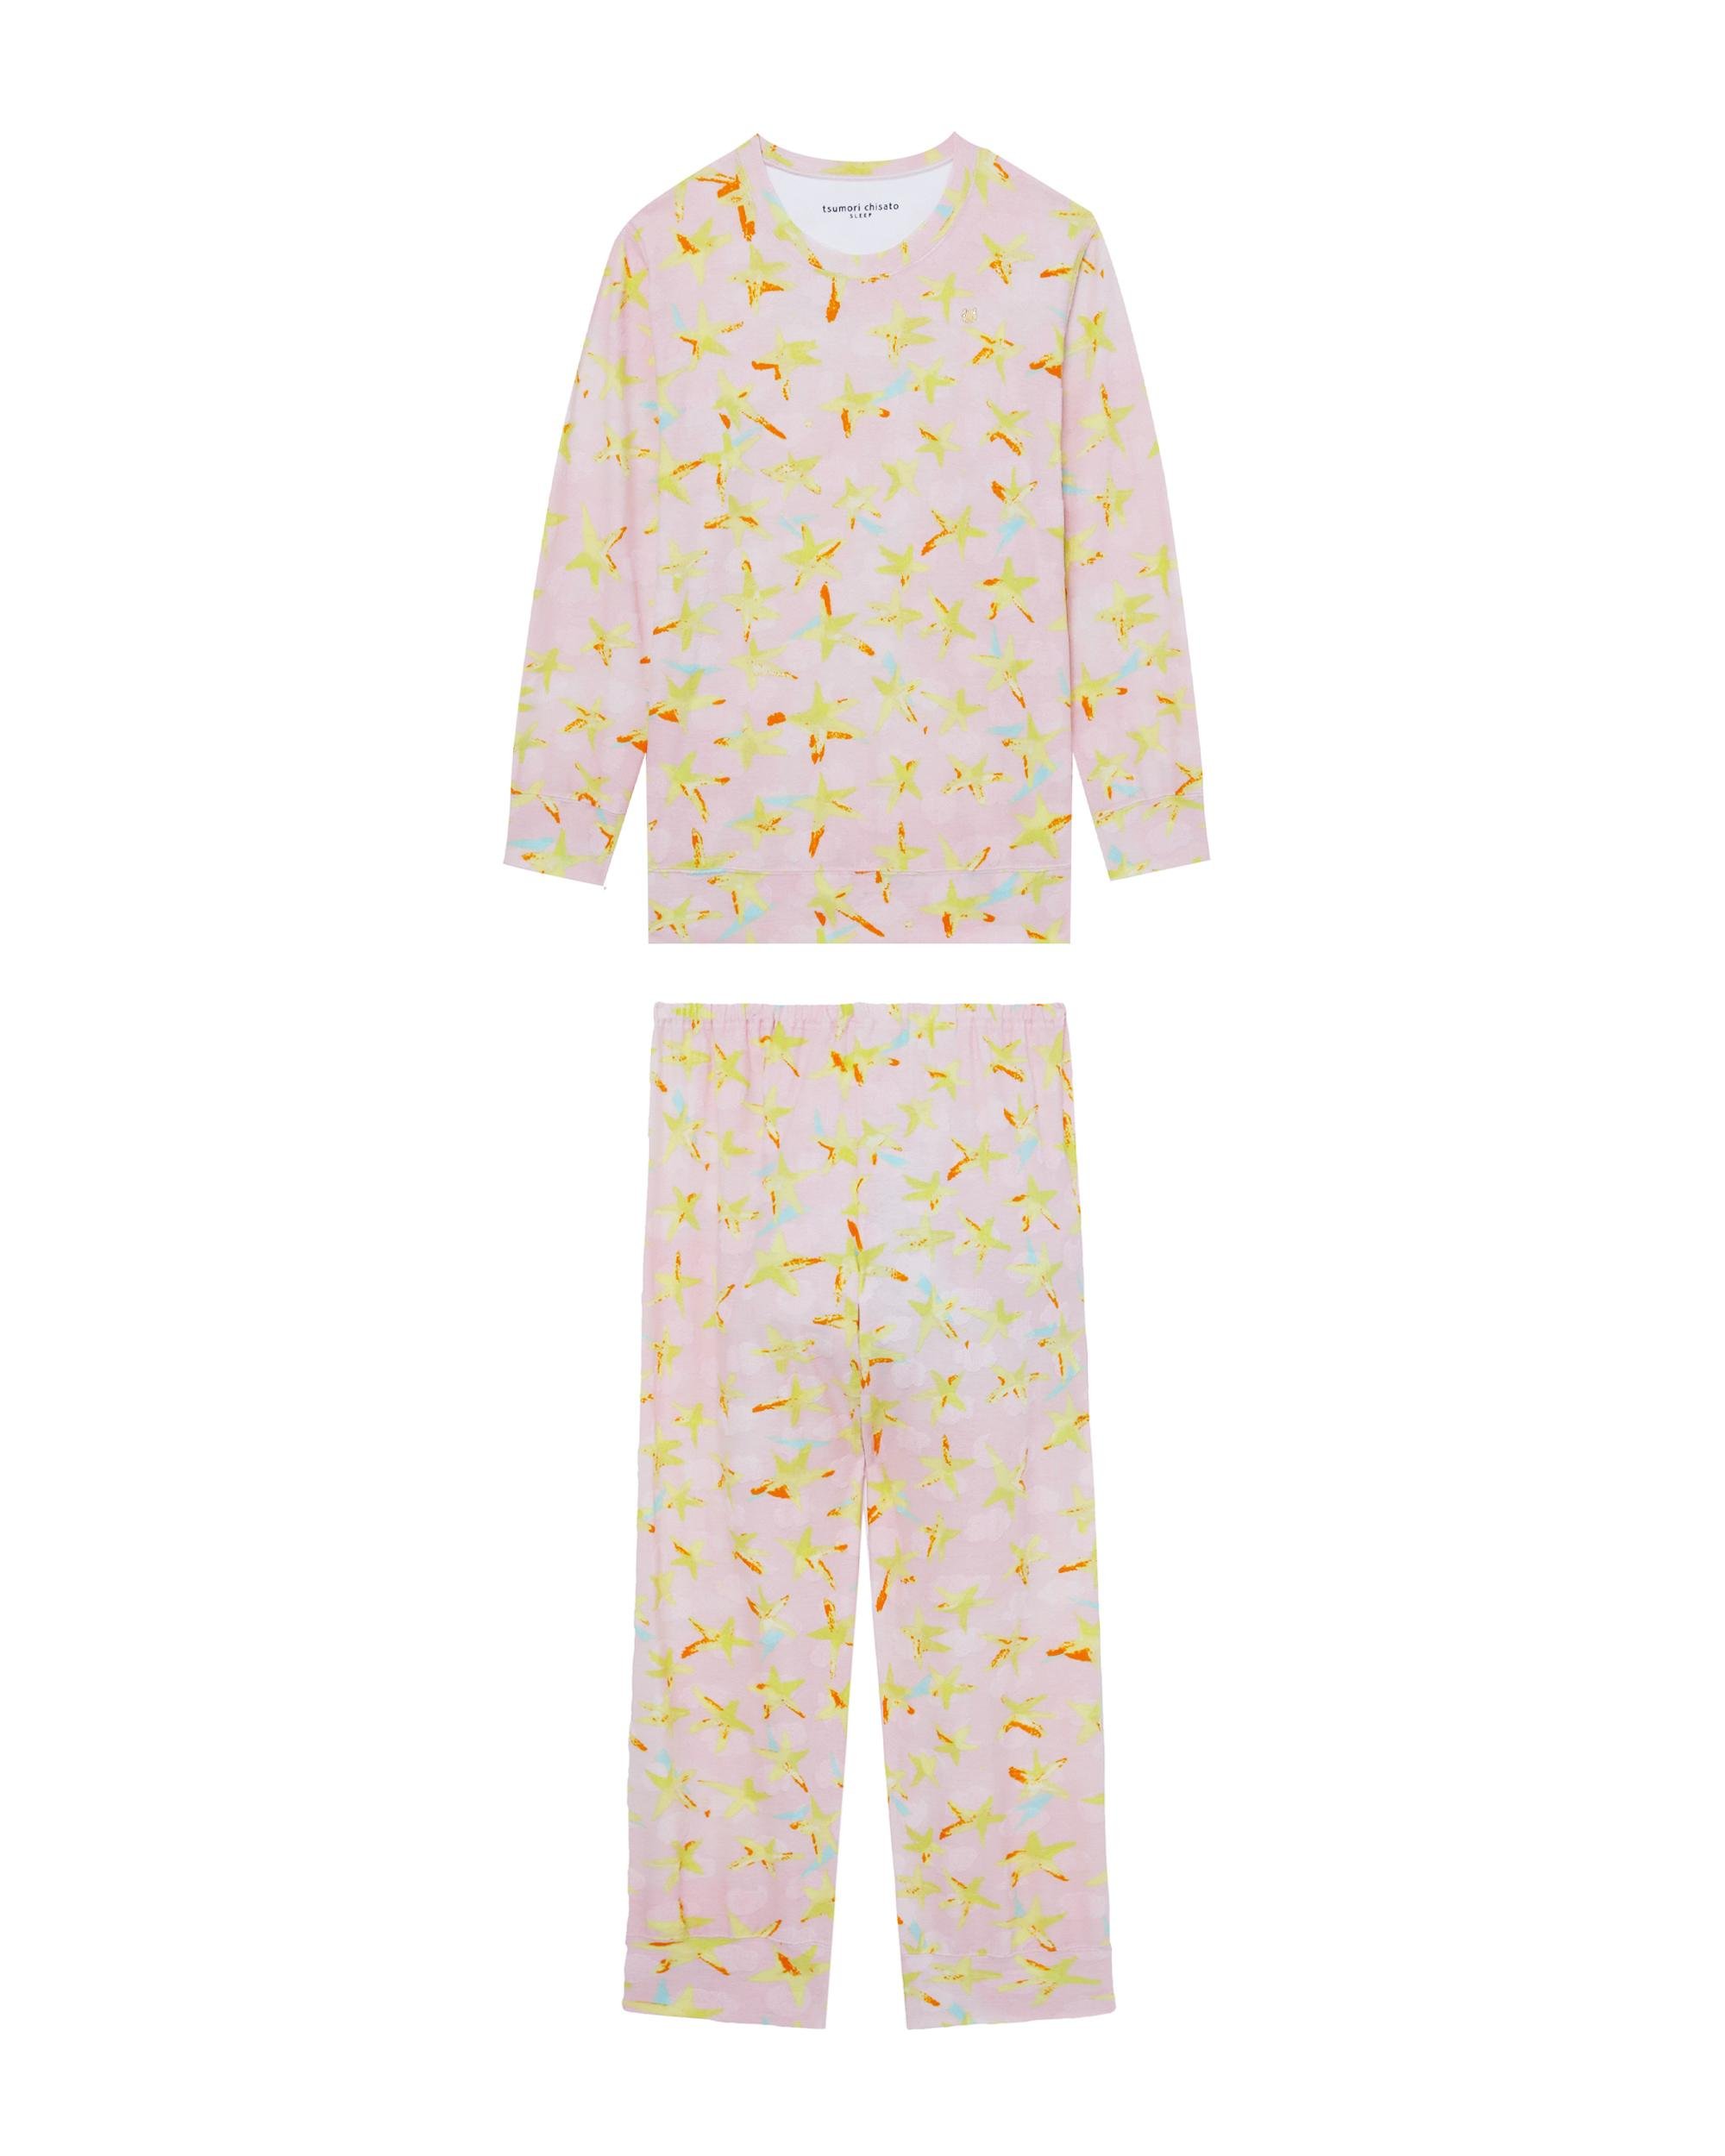 Star pattern sleepwear set by TSUMORI CHISATO